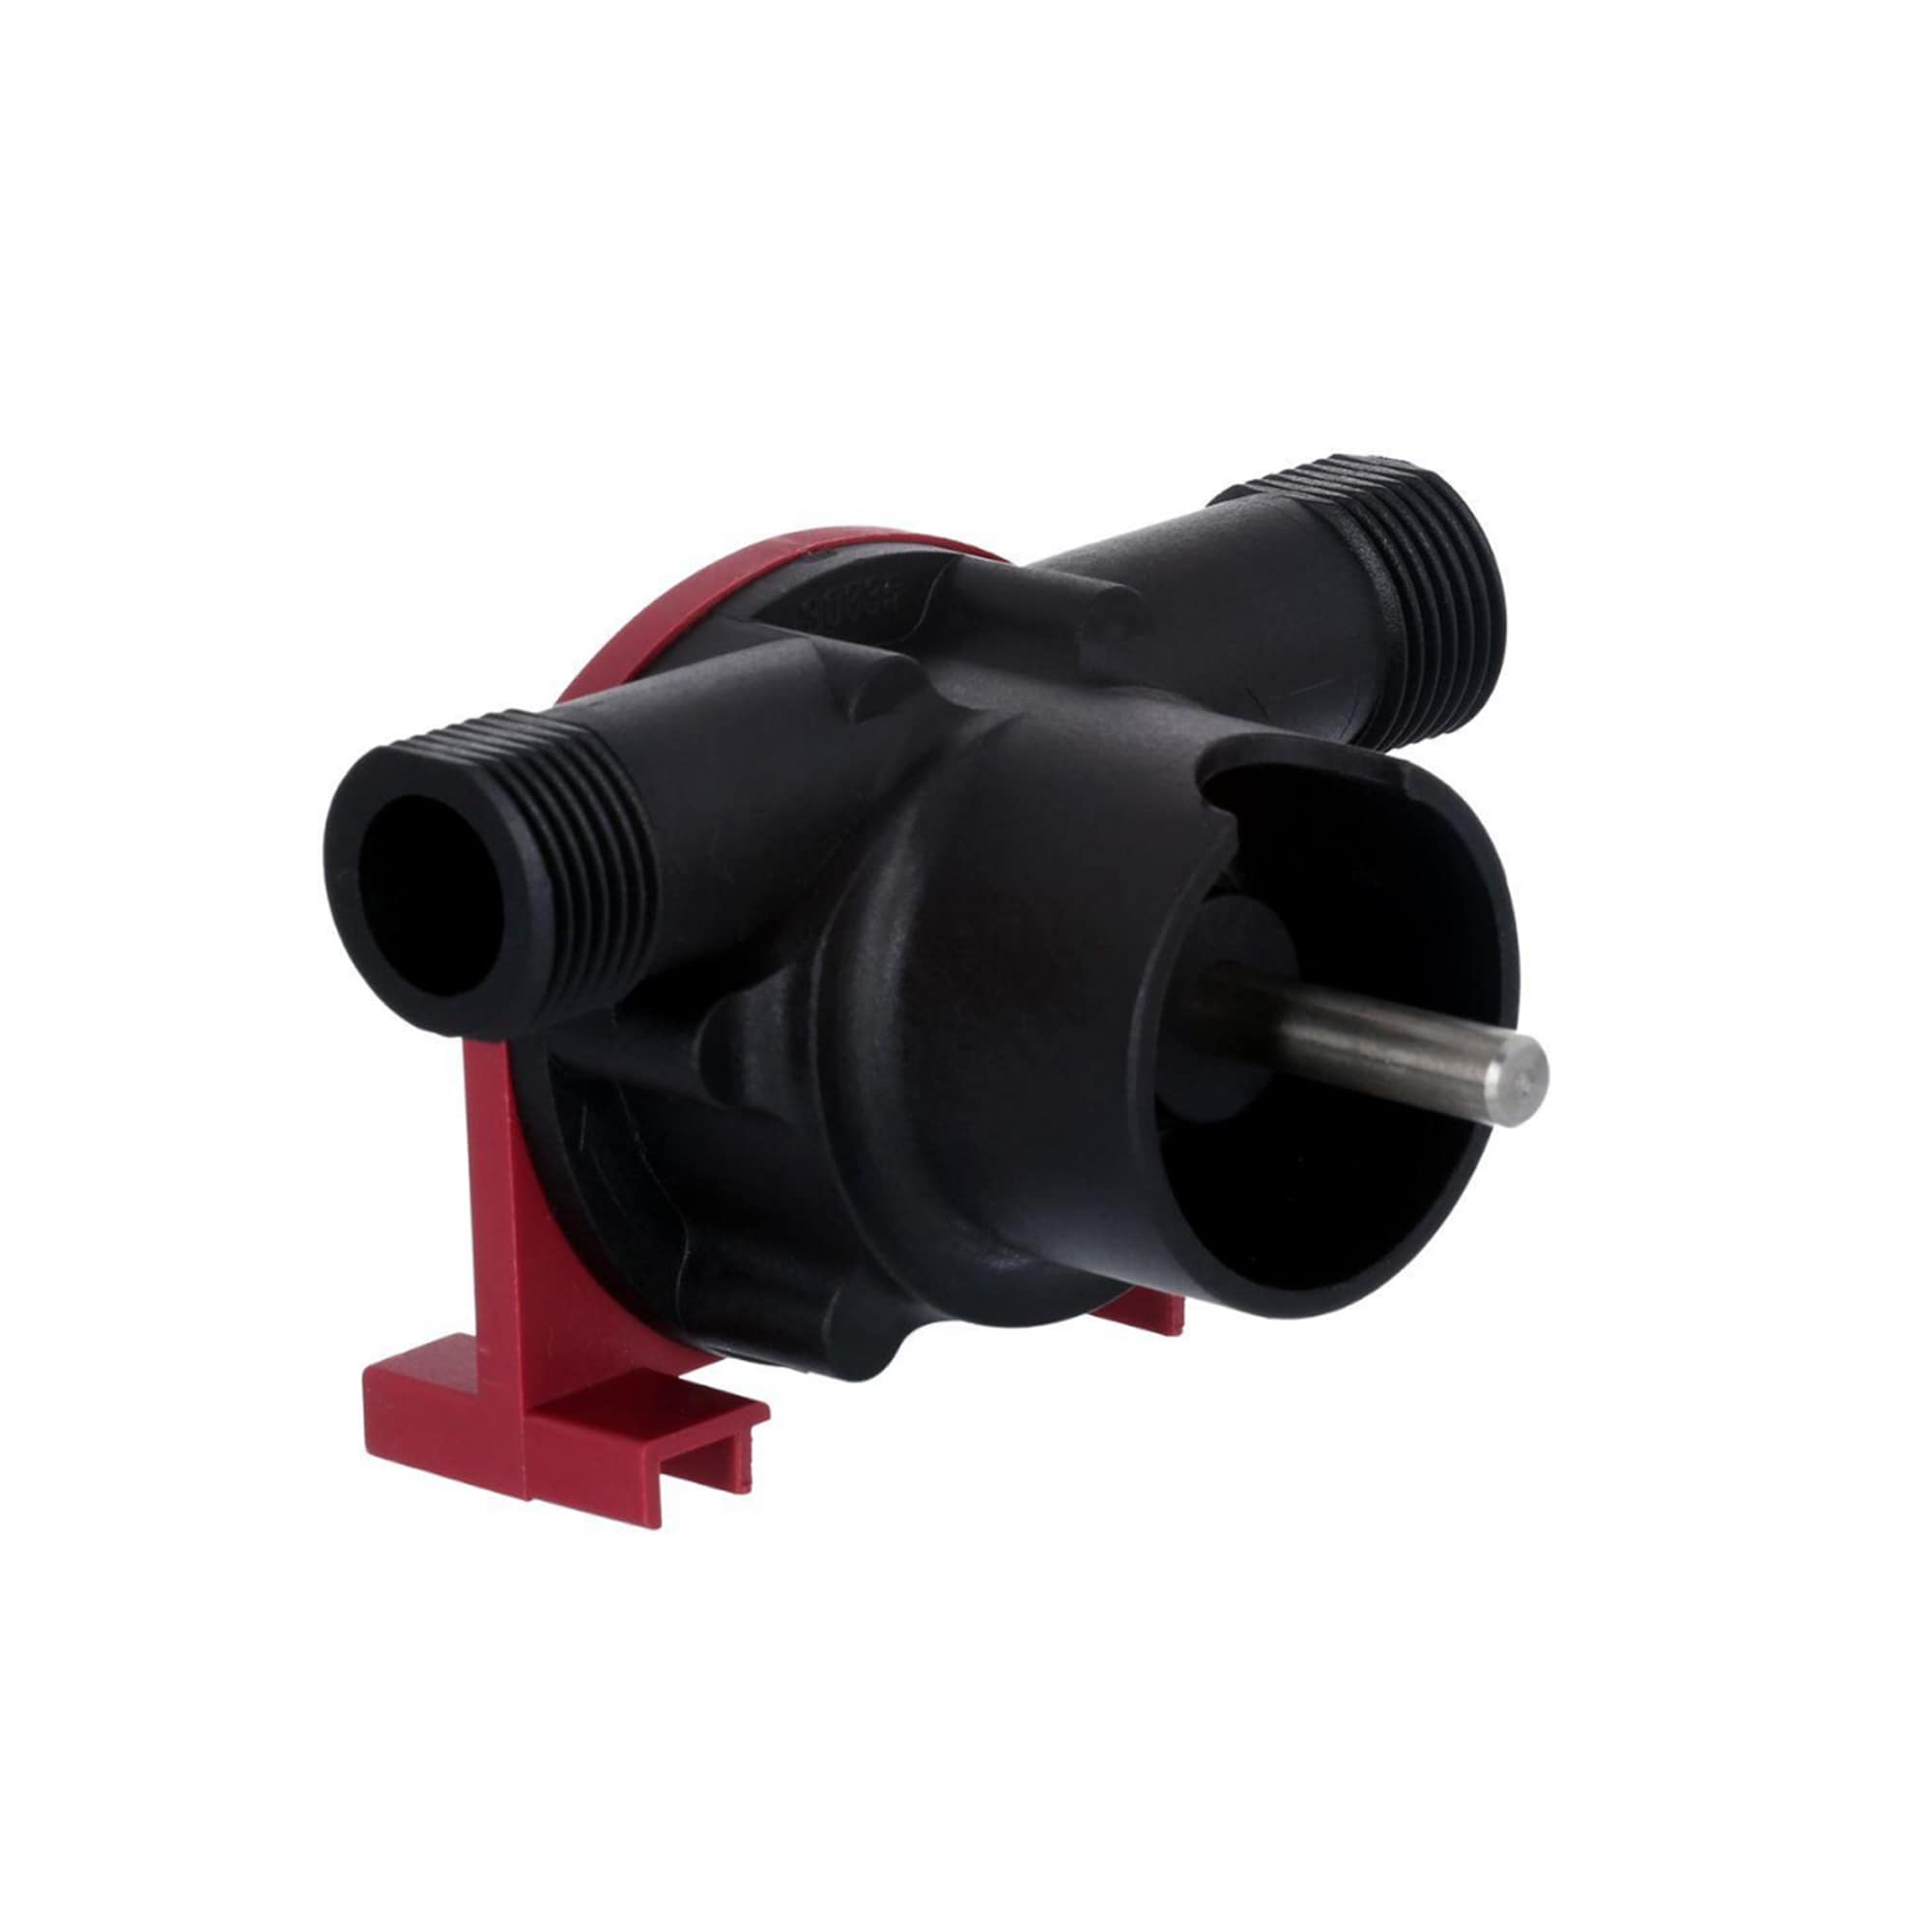 Milescraft 1314 2,800 RPM Drill Pump for sale online 